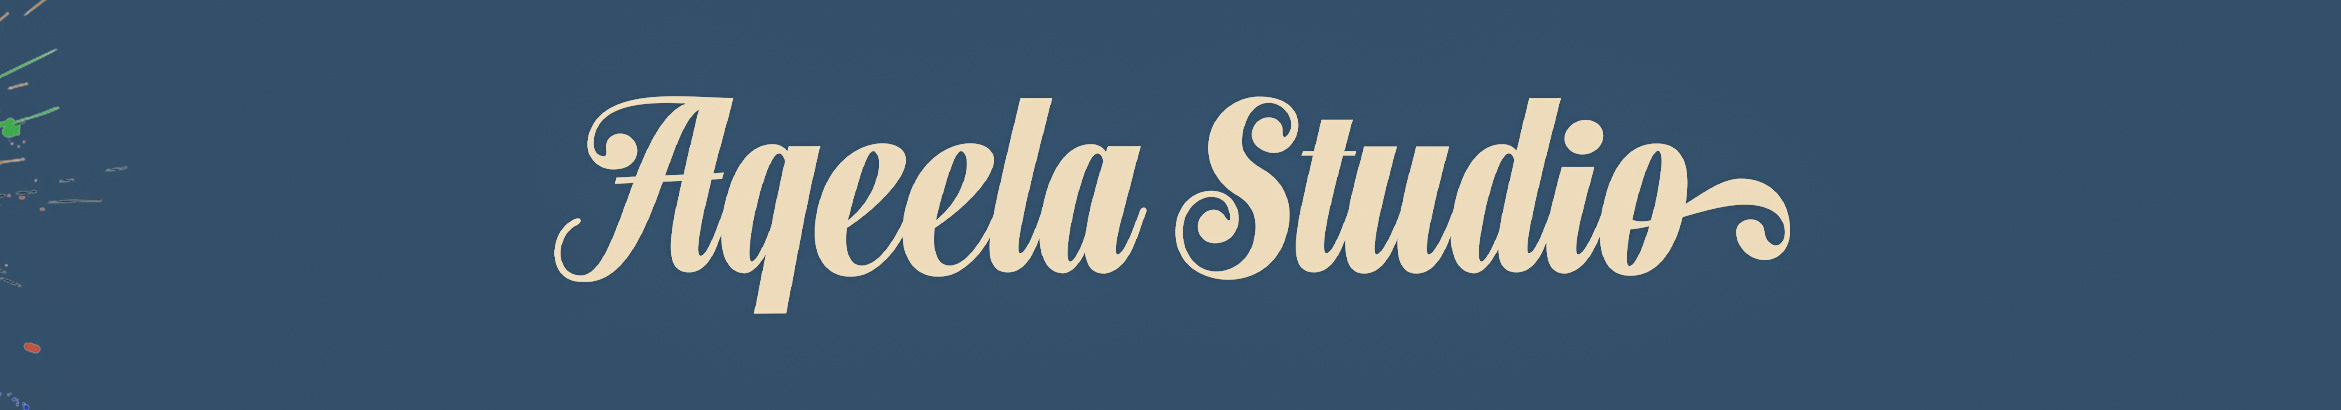 Aqeela Studio's profile banner